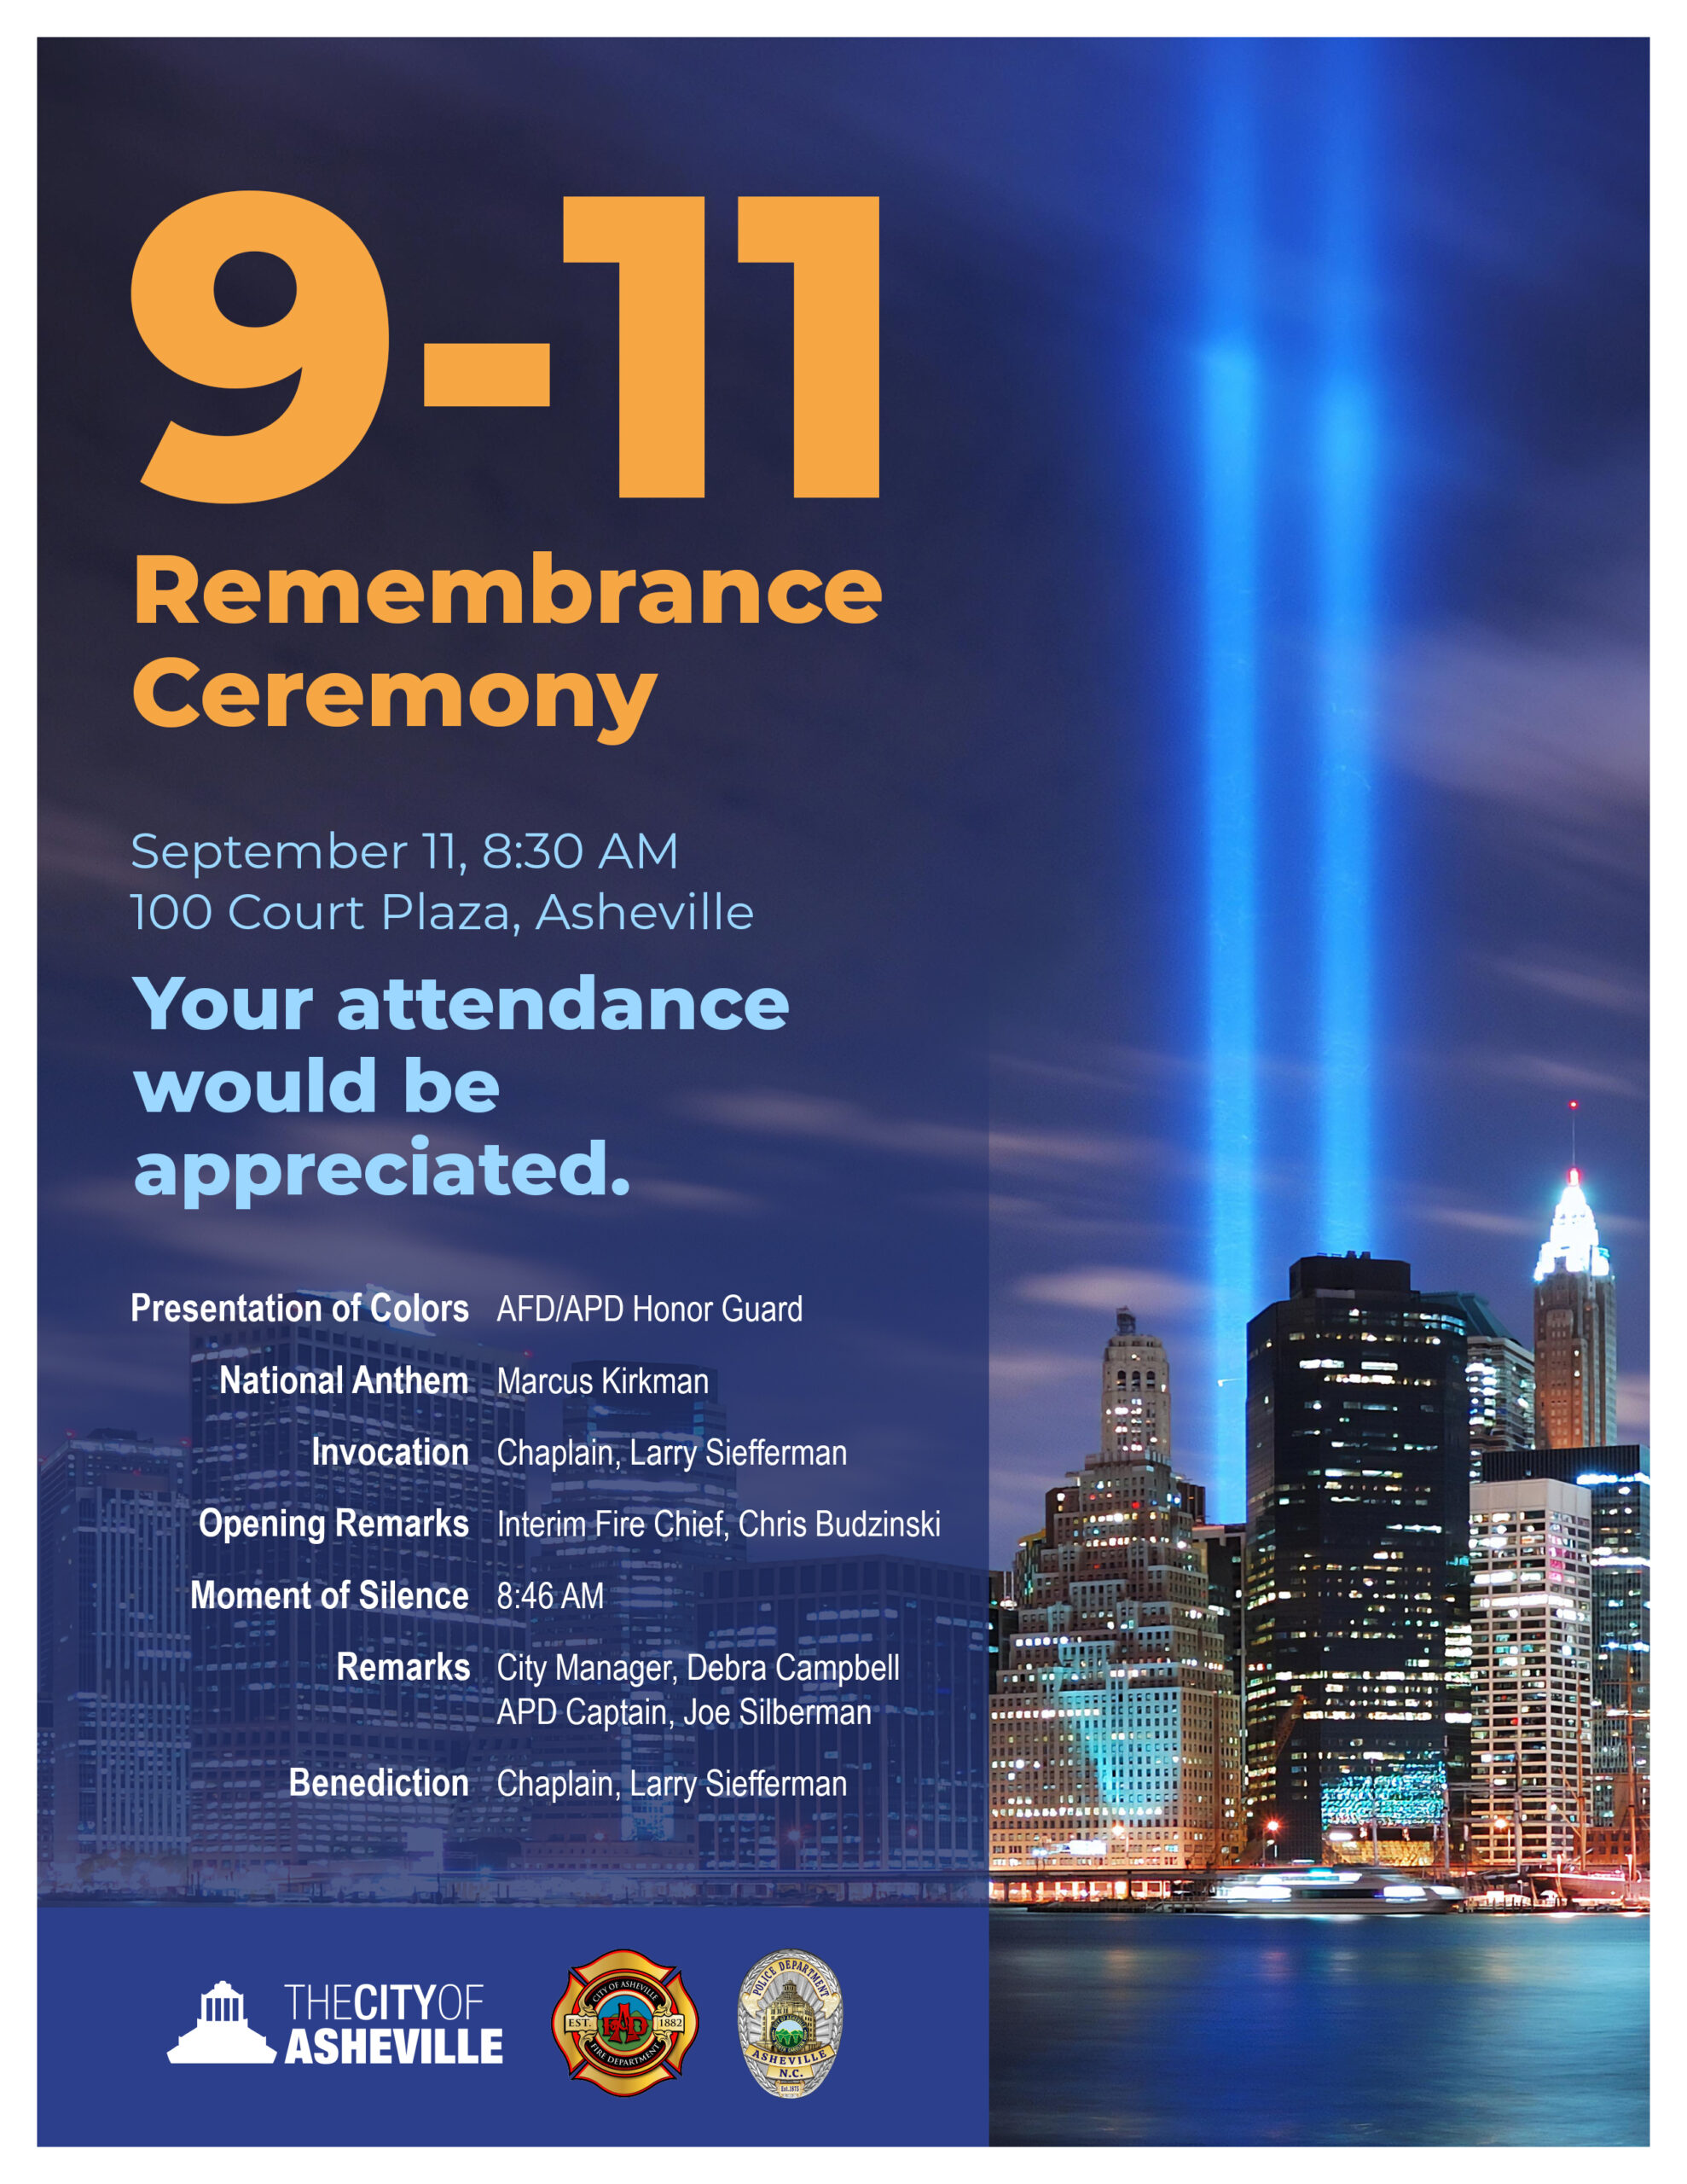 9 11 remembrance